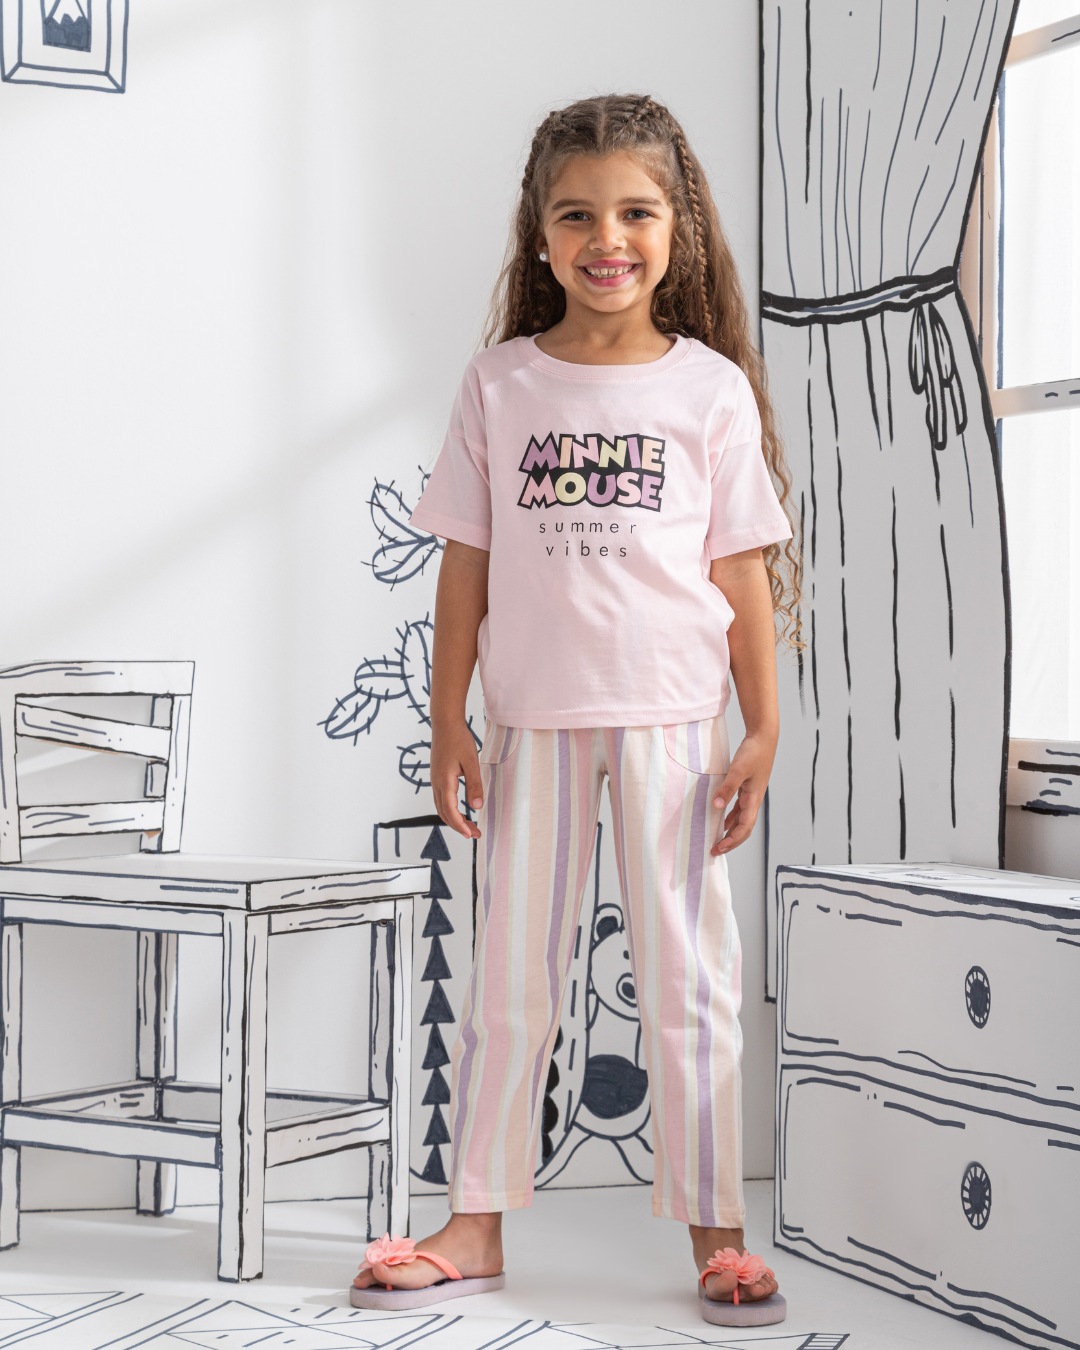 Minnie mouse summer vibes Girls' half sleeve pajamas